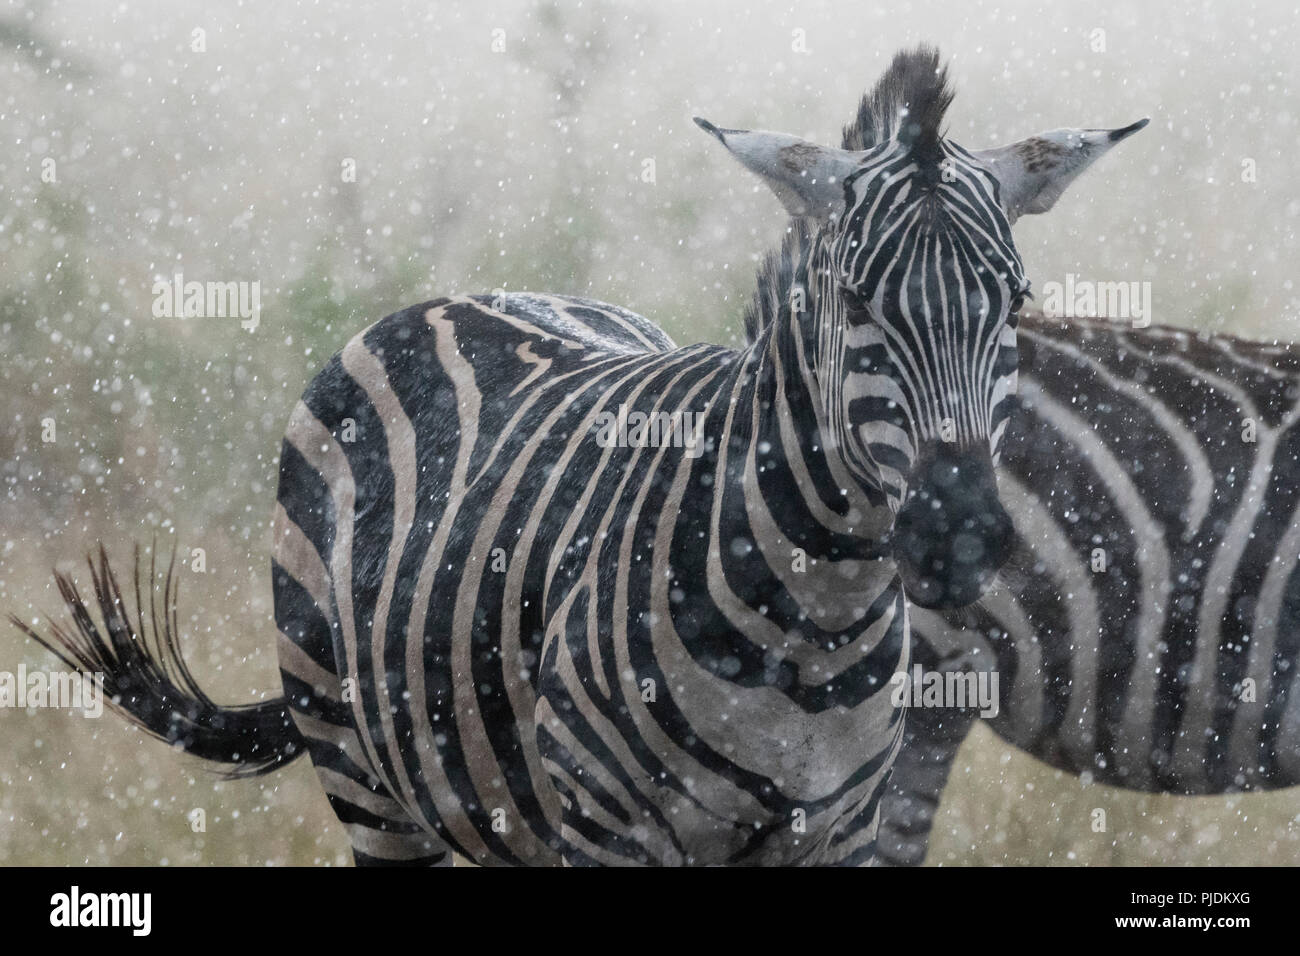 Plains zebras (Equus quagga) under the rain, Seronera, Serengeti National Park, Tanzania Stock Photo